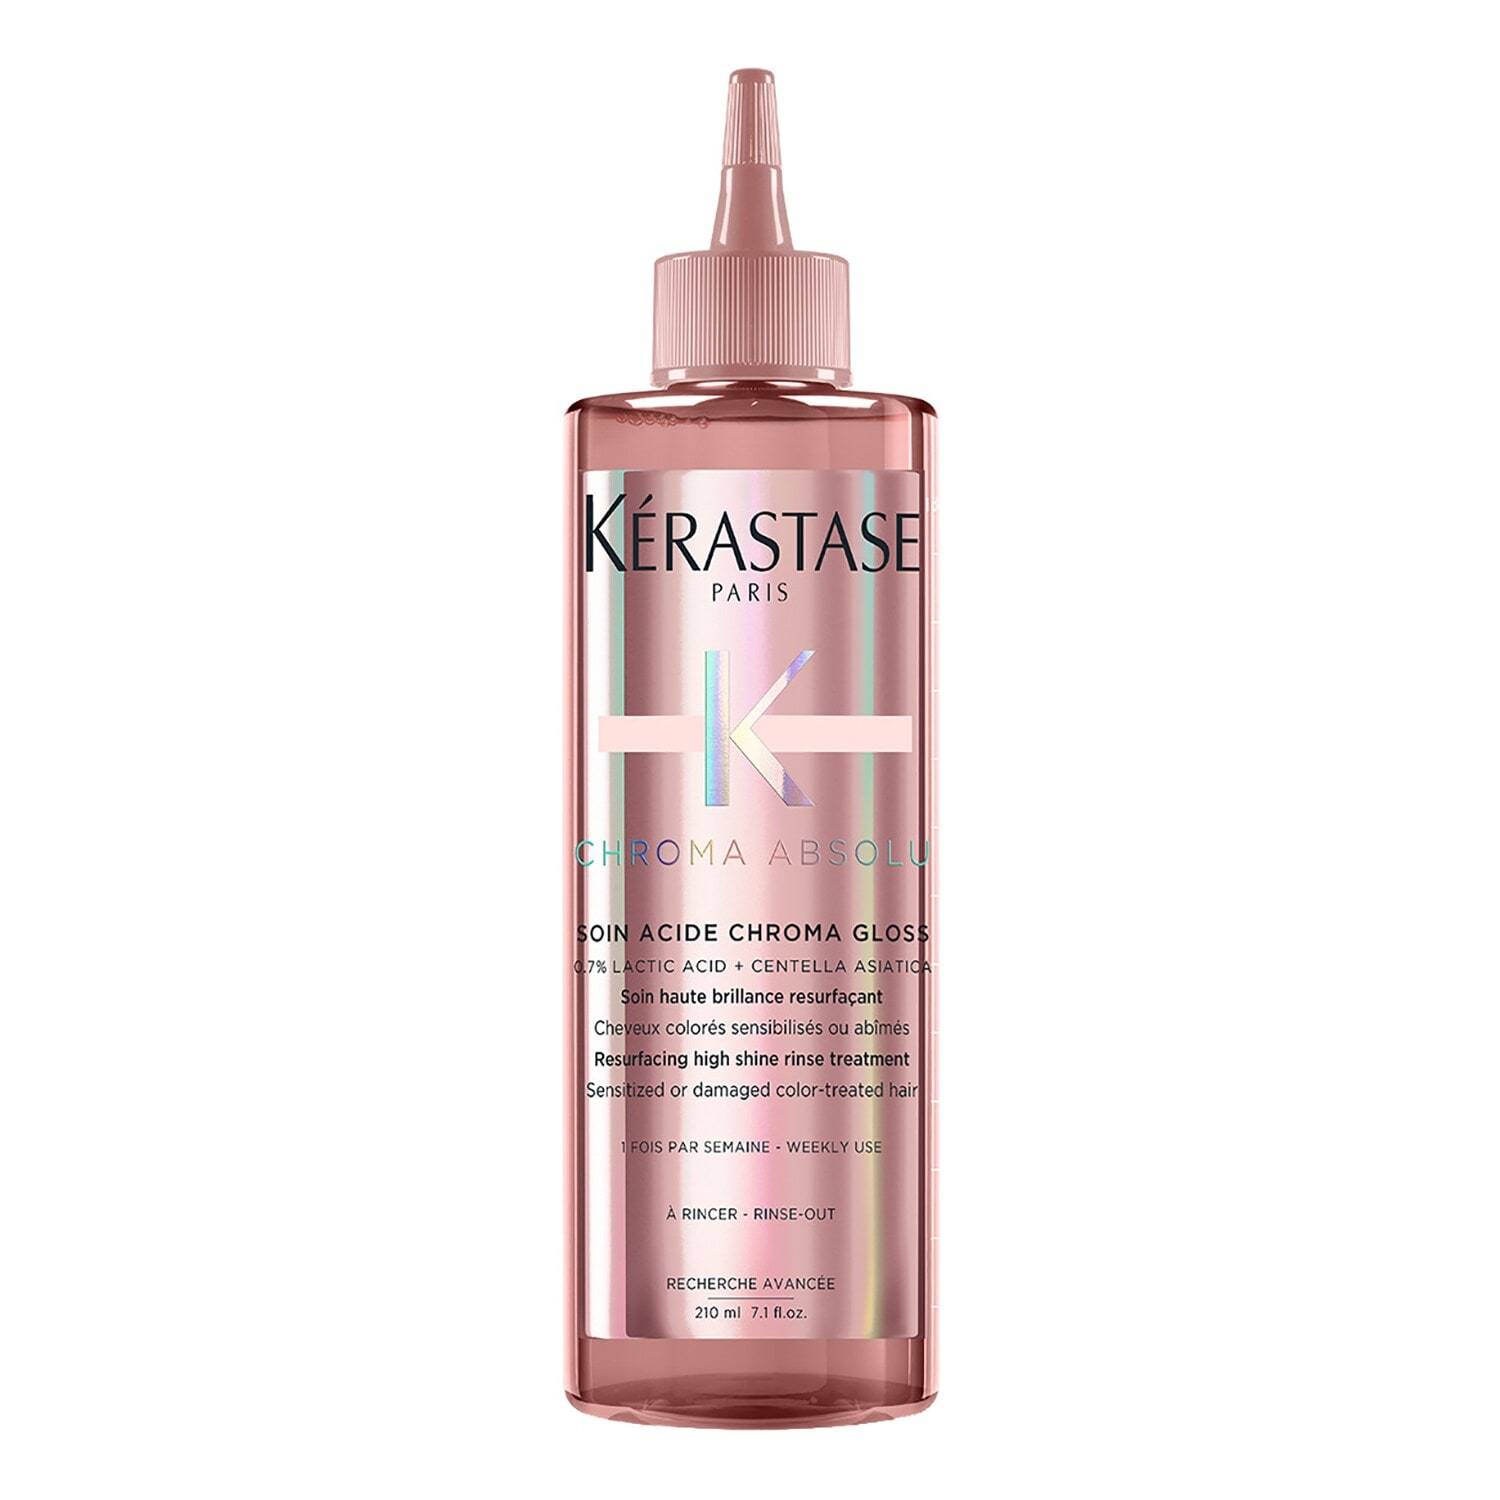 Chroma Absolu - Soin acide chroma gloss cheveux colorés - Kérastase